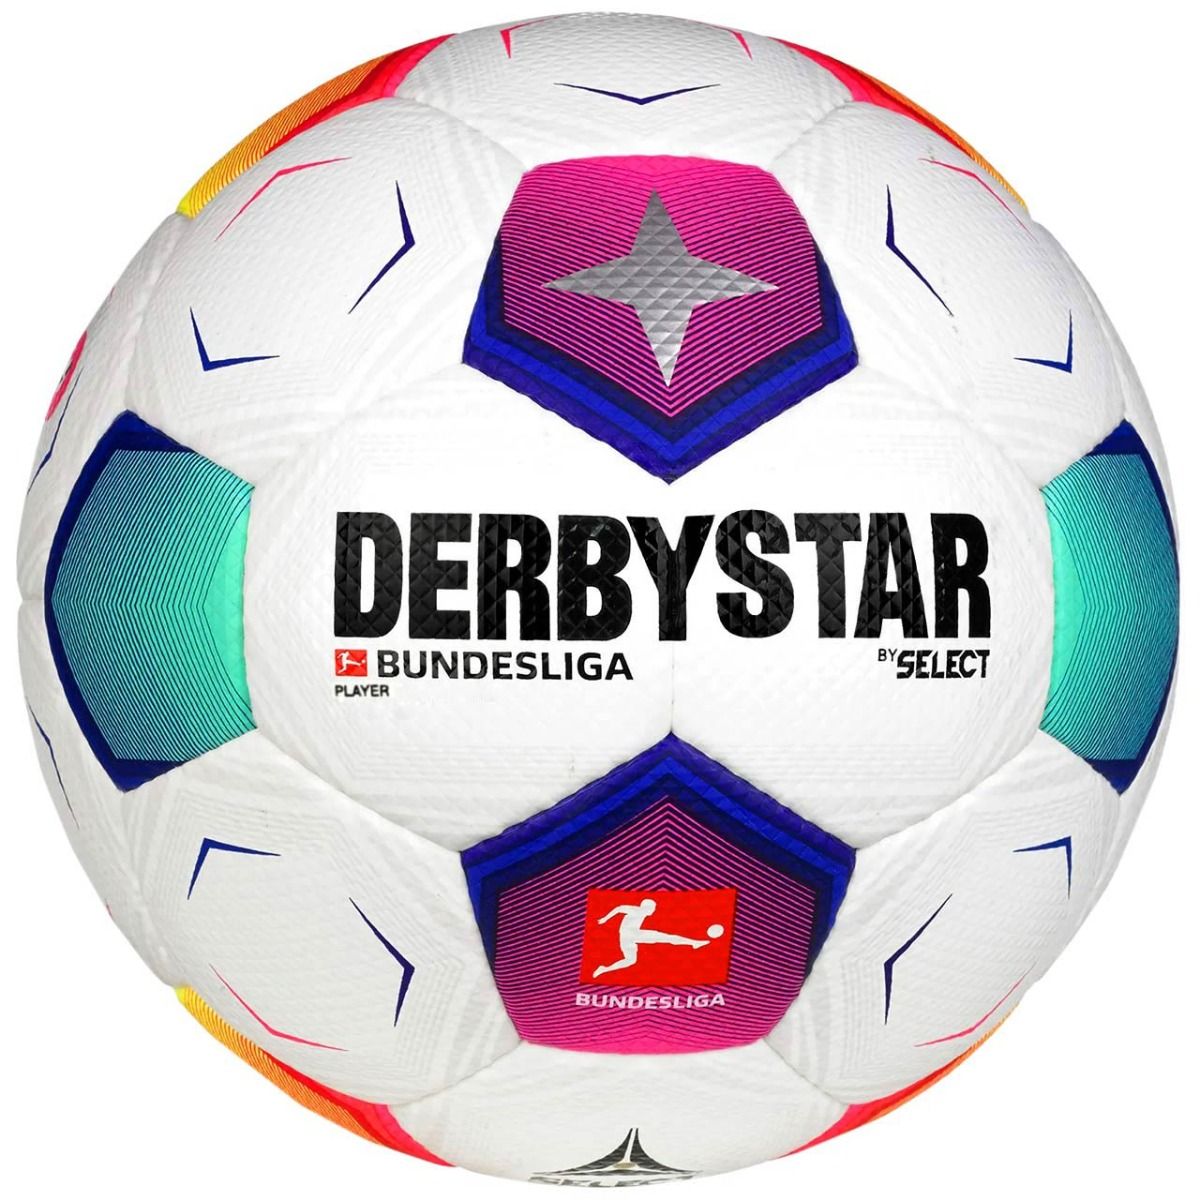 Select Fußball Derbystar Bundesliga Player v23 18178